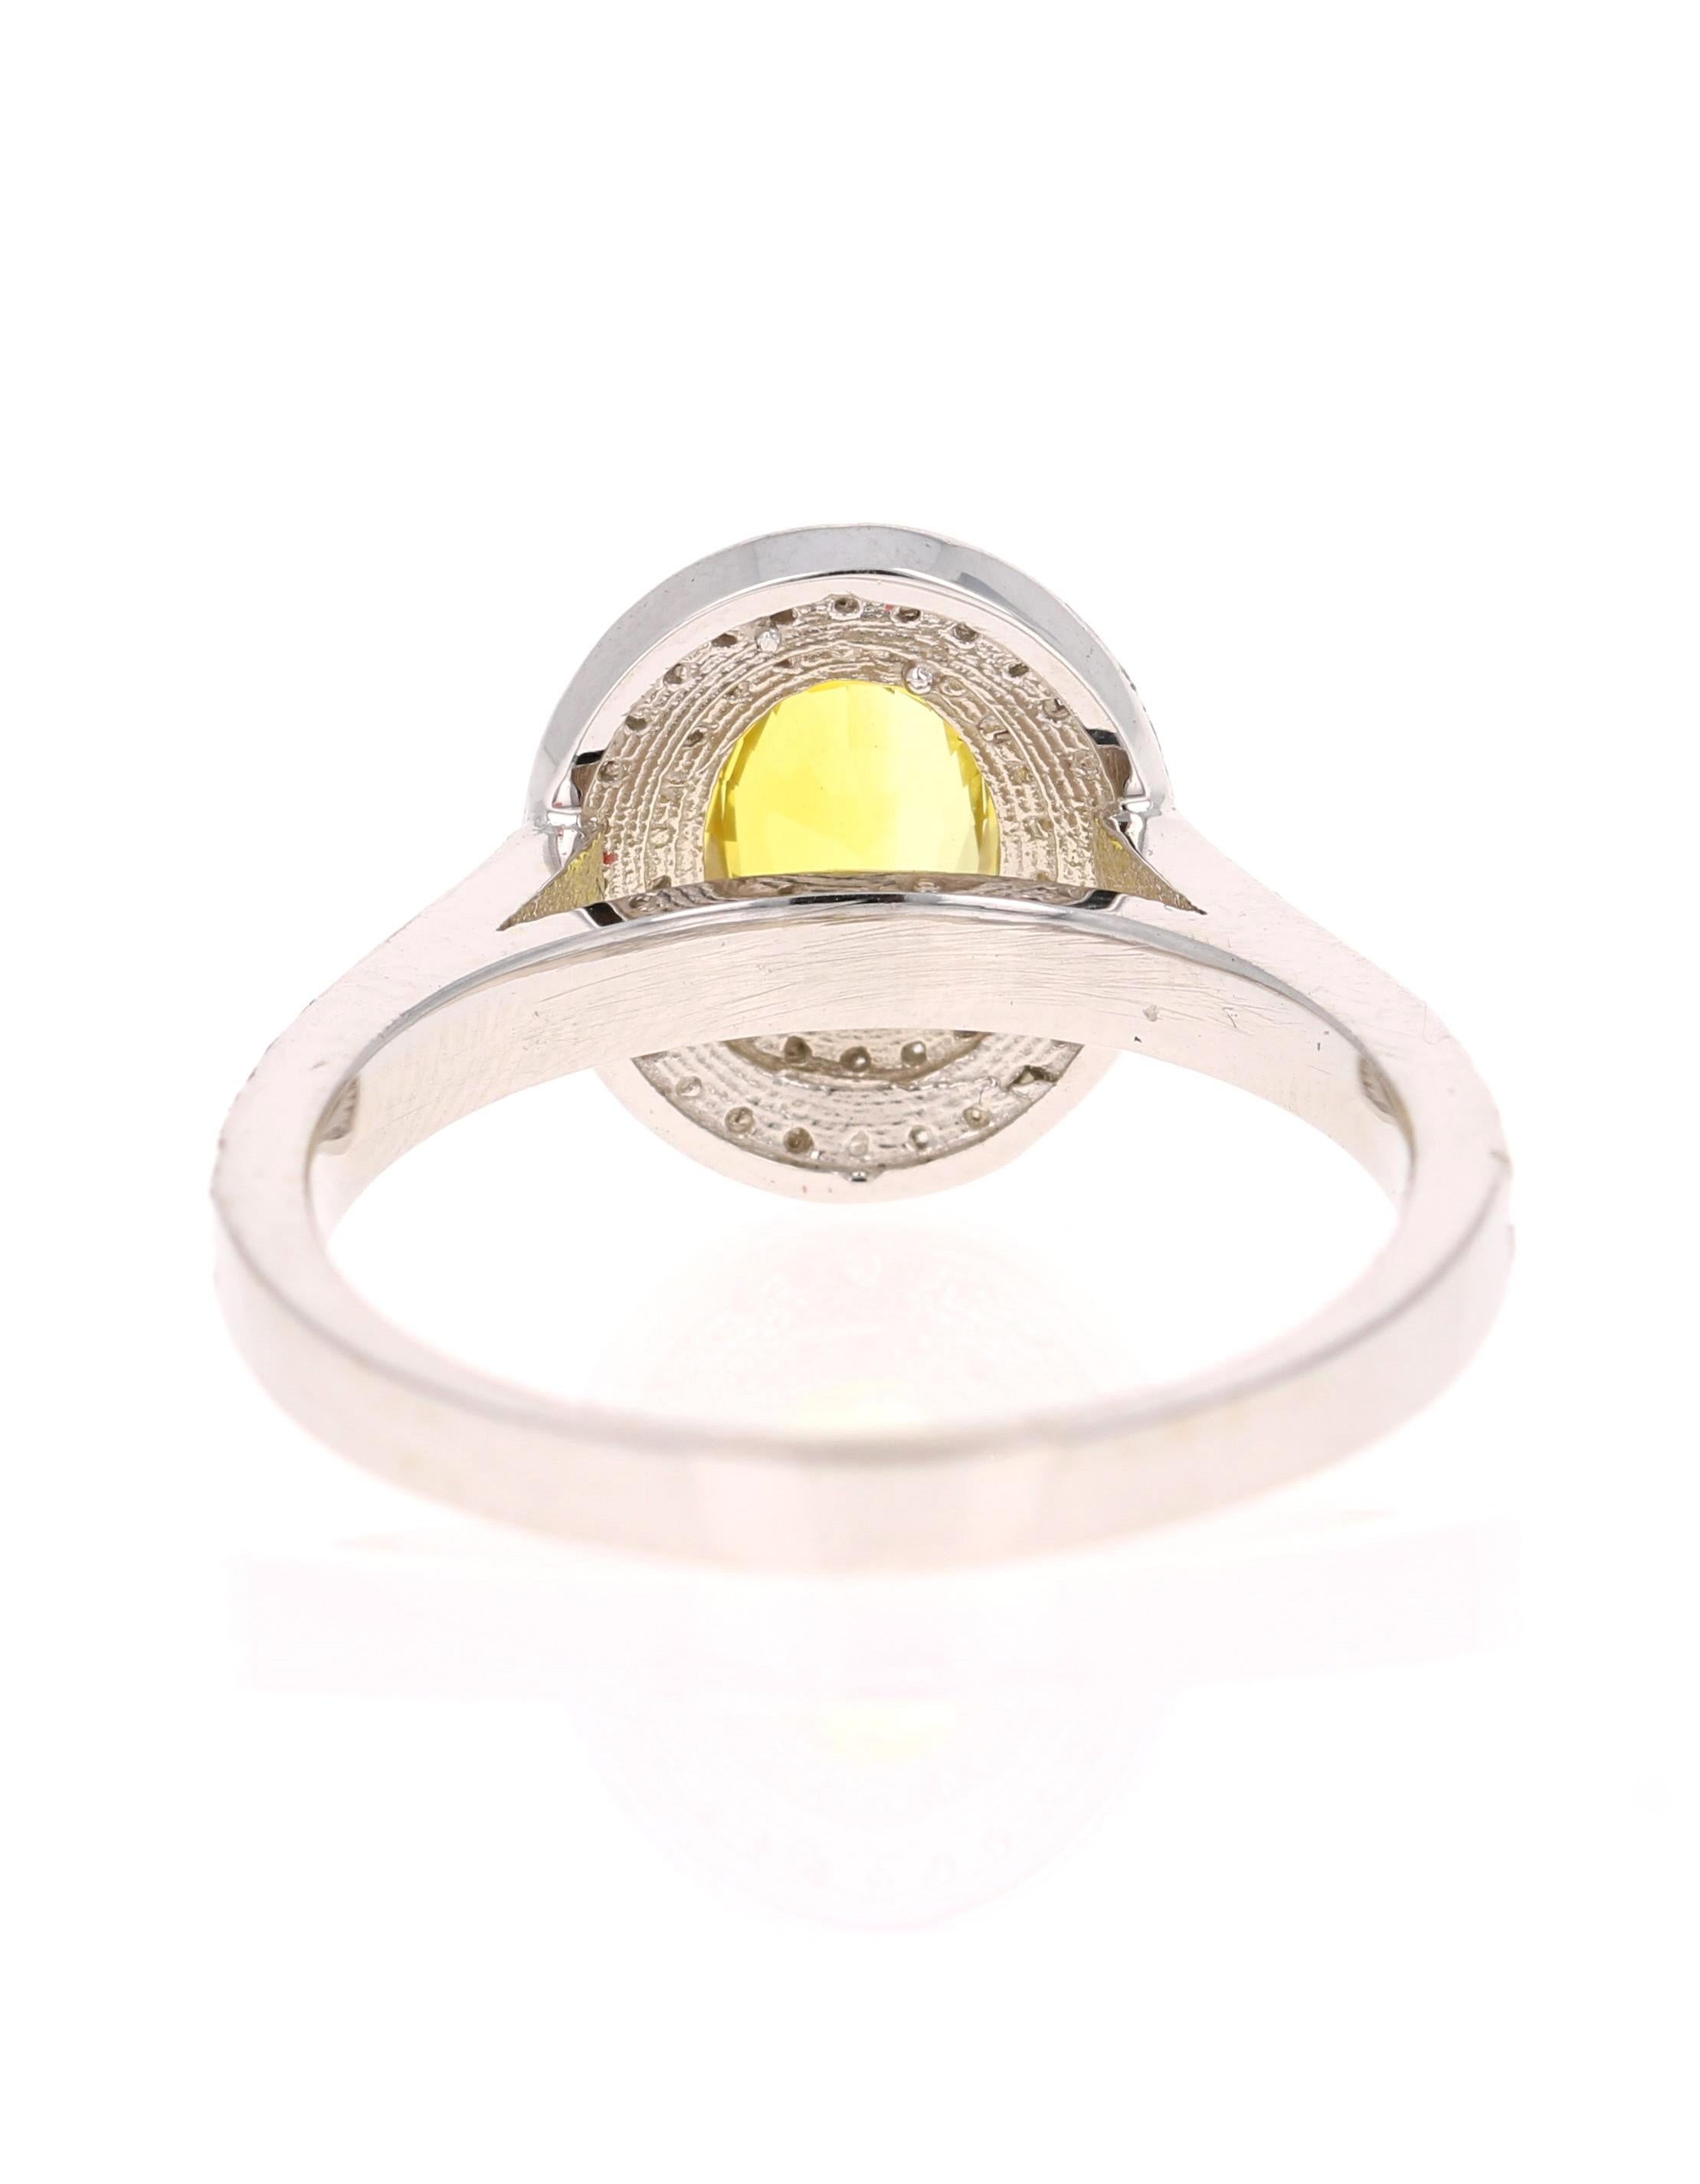 Oval Cut 1.87 Carat Yellow Pink Sapphire Diamond 14 Karat White Gold Ring For Sale